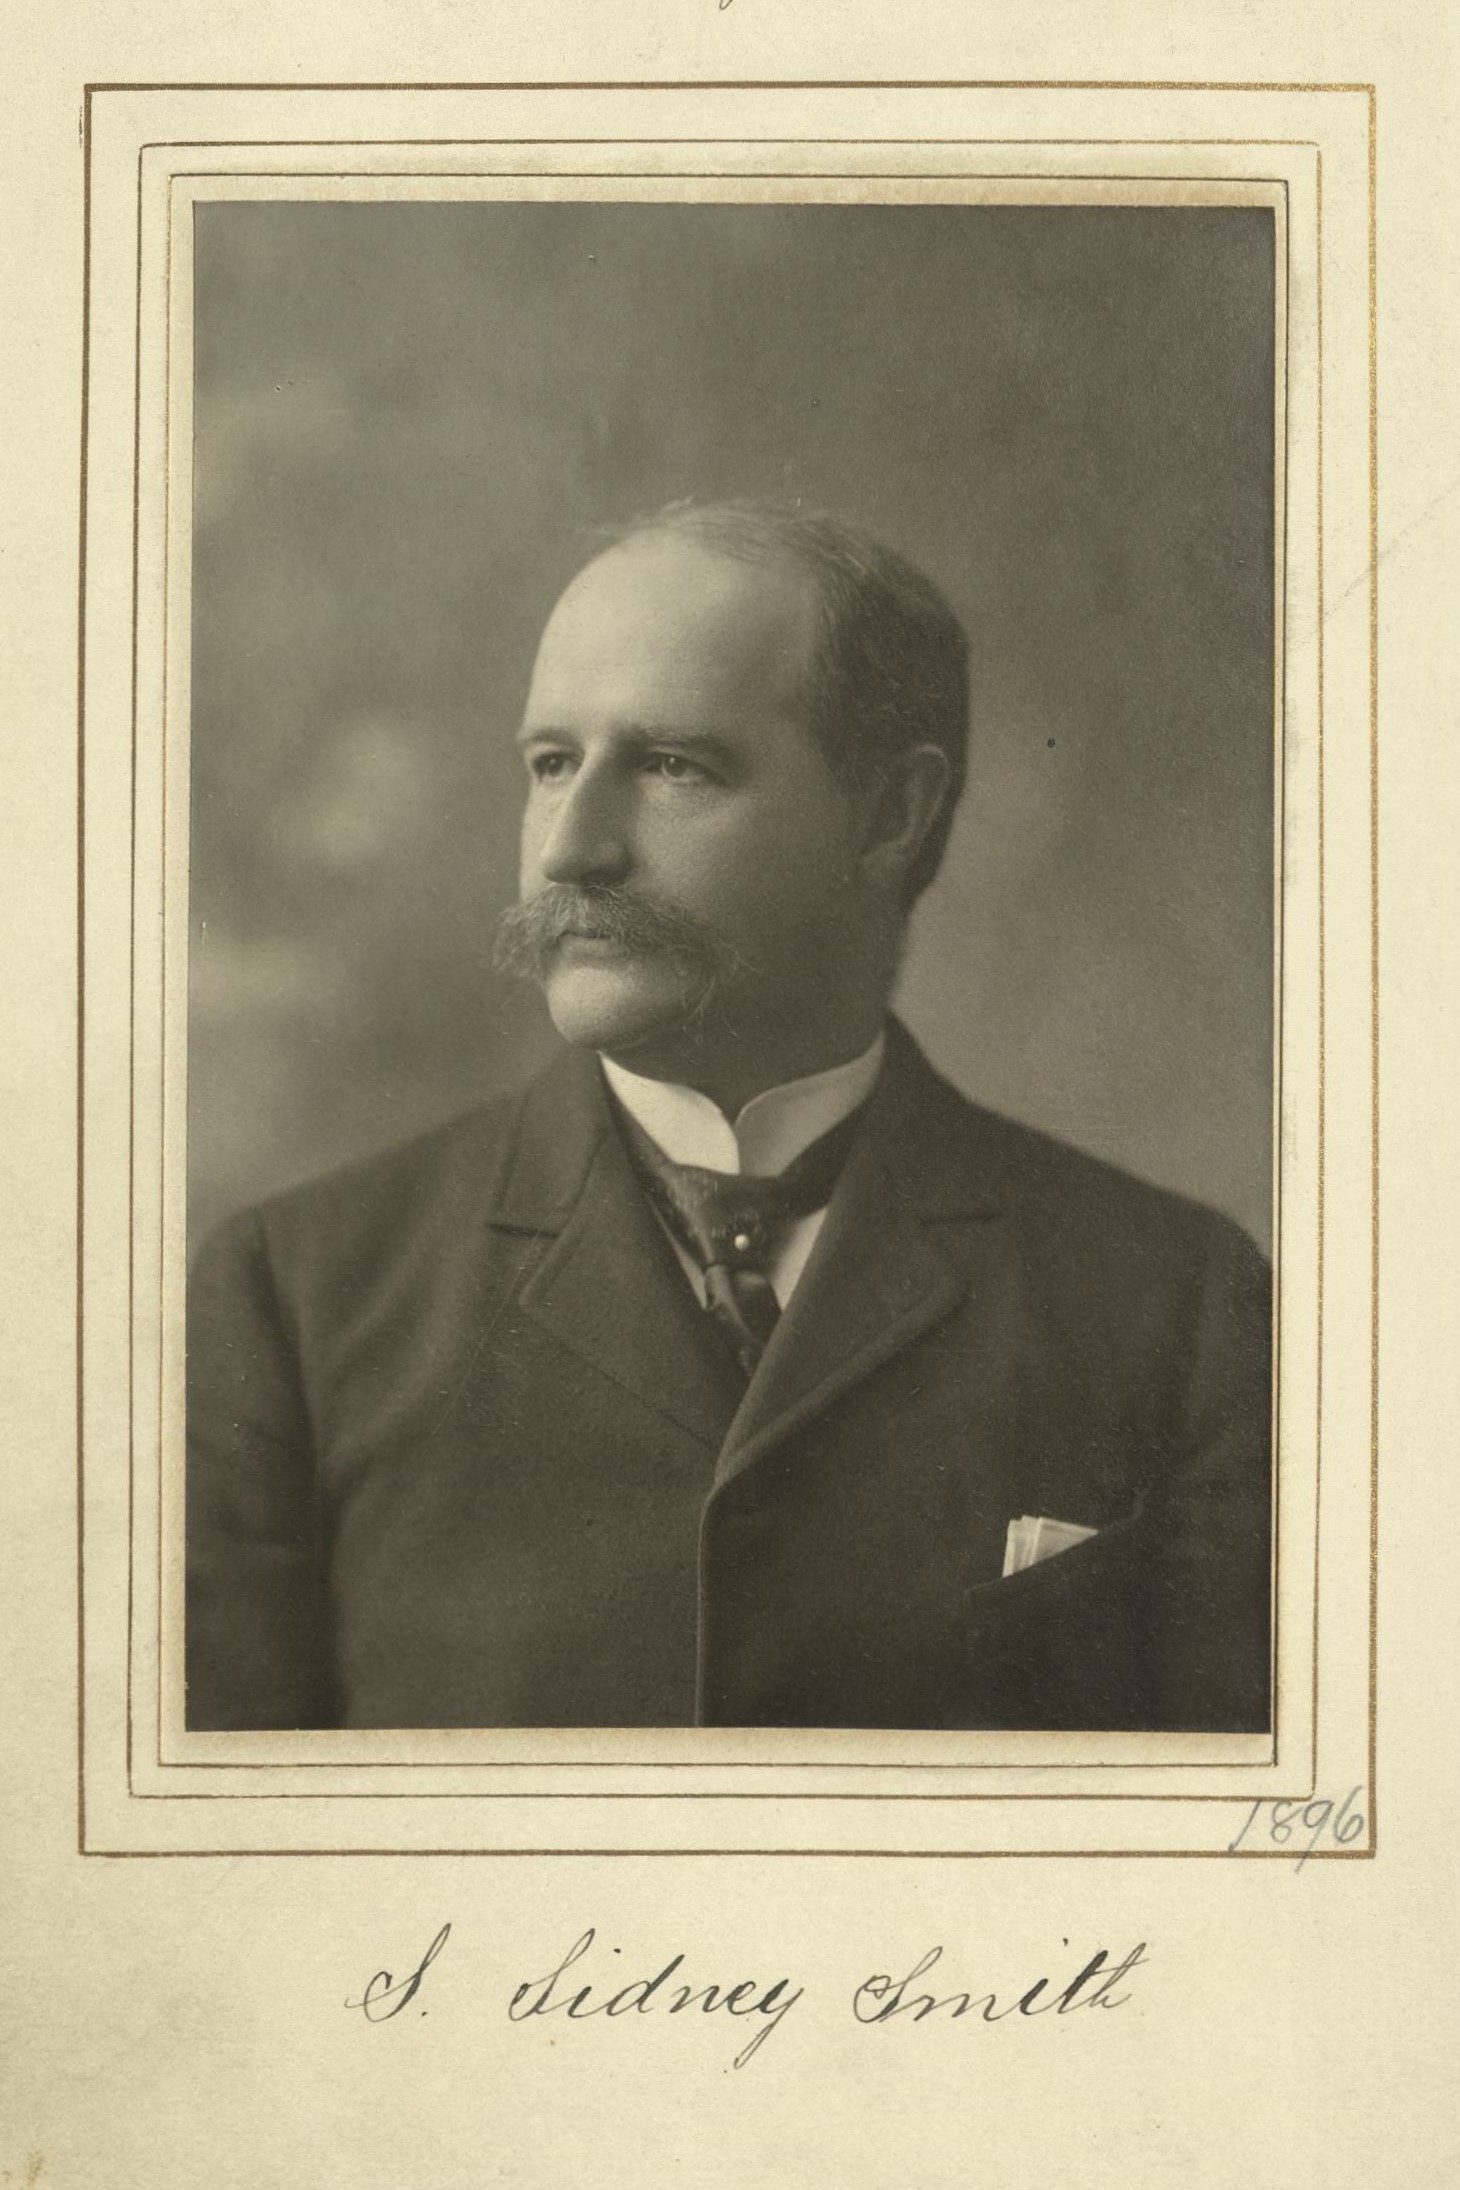 Member portrait of S. Sidney Smith